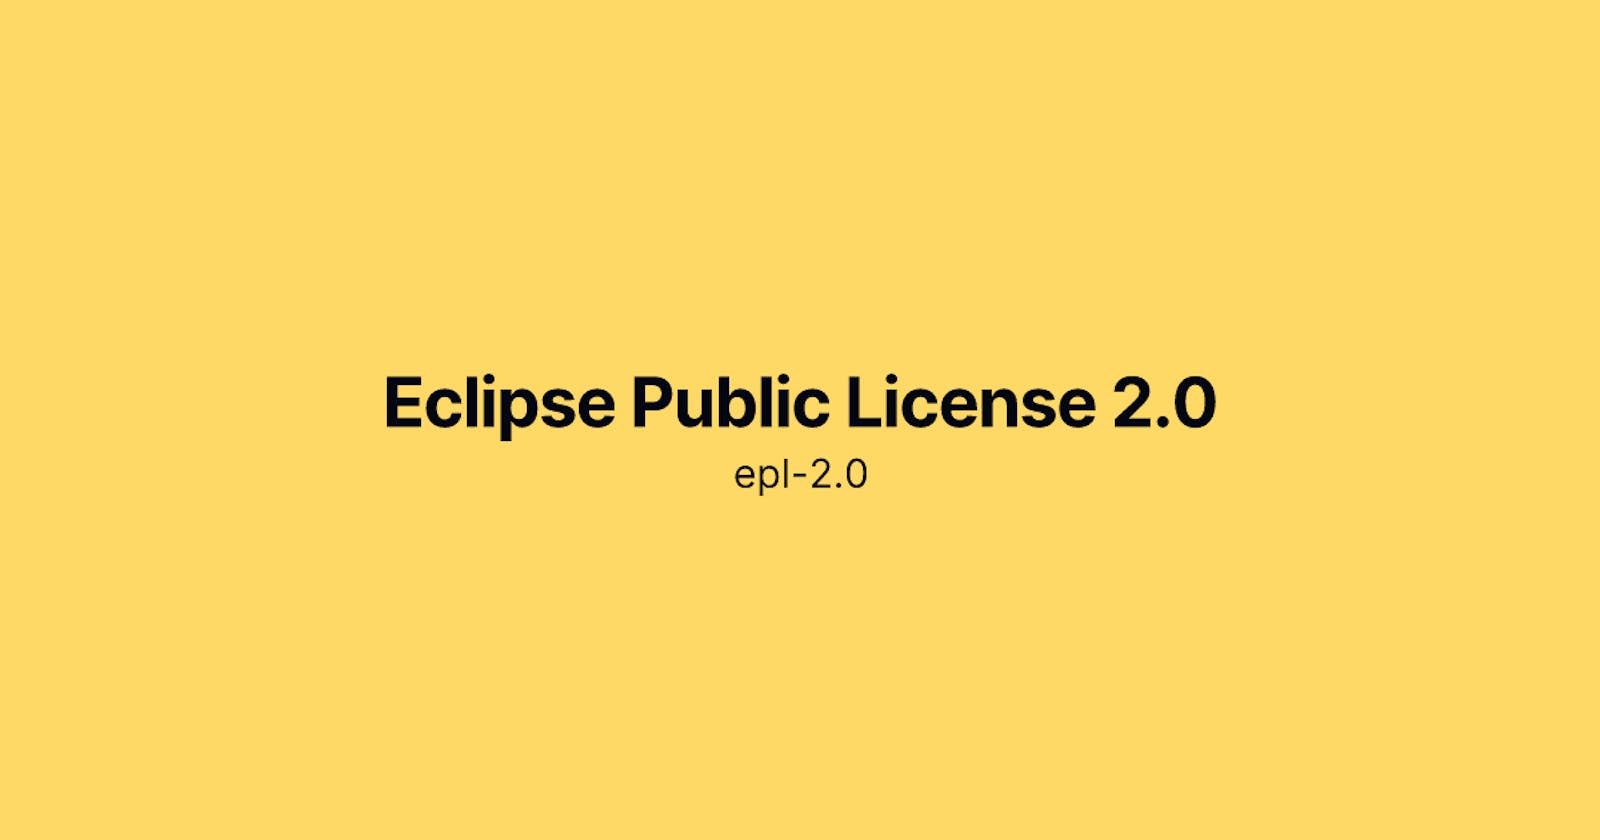 Eclipse Public License 2.0